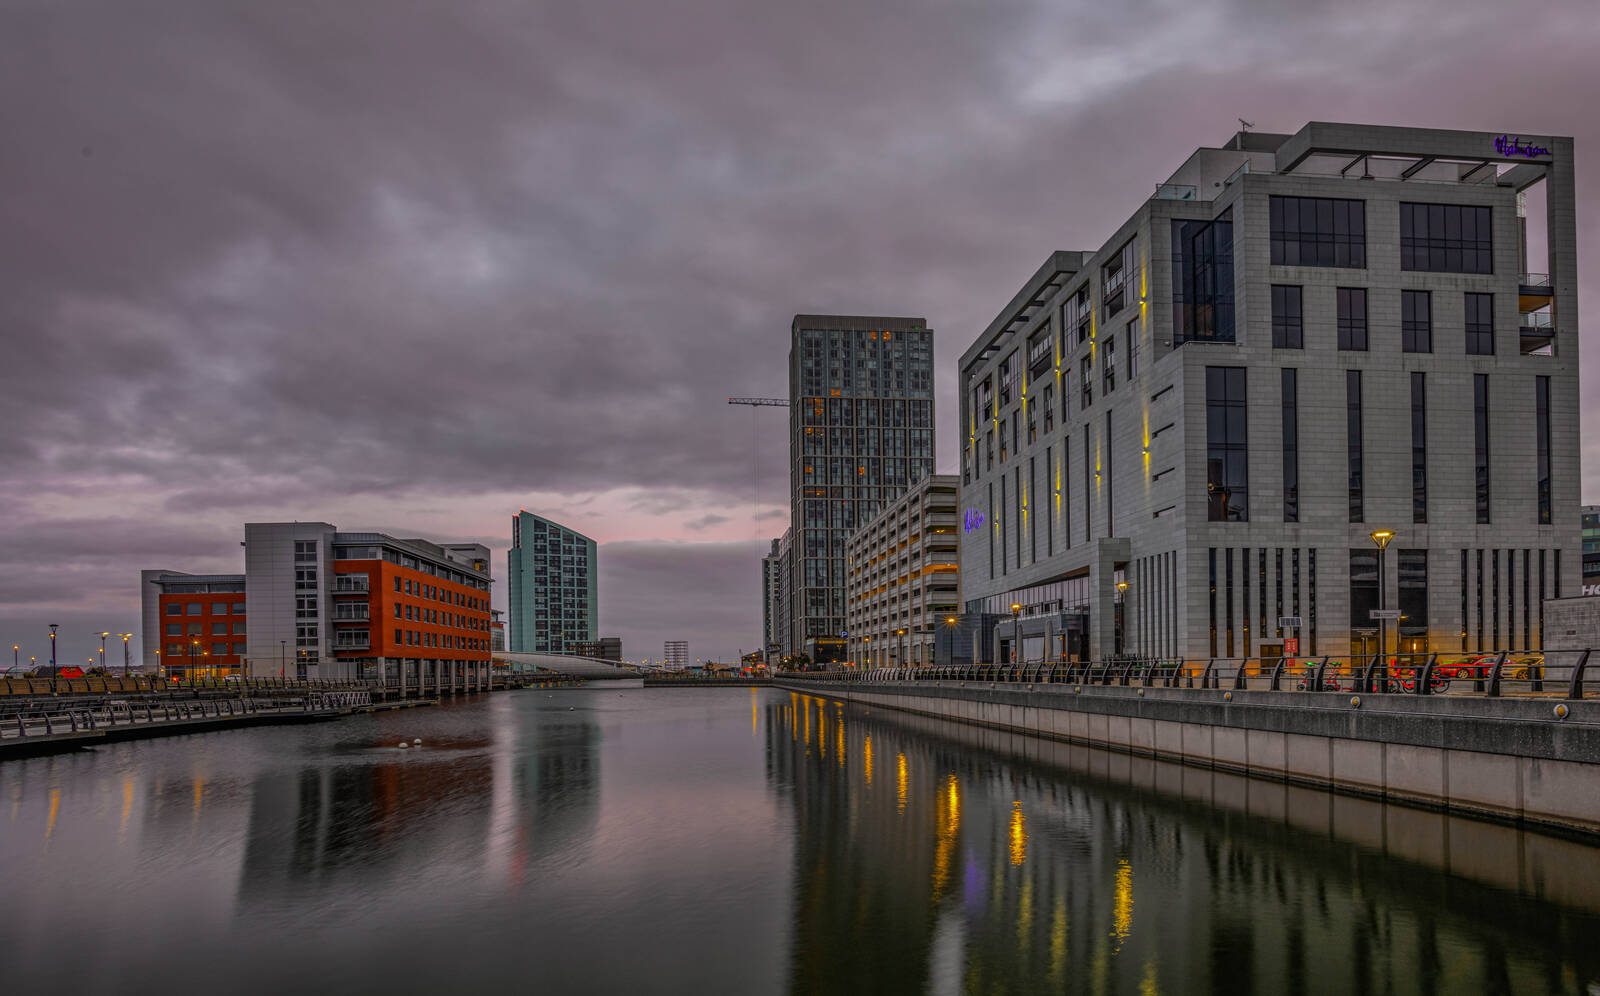 Image of Liverpool Docks by michael bennett